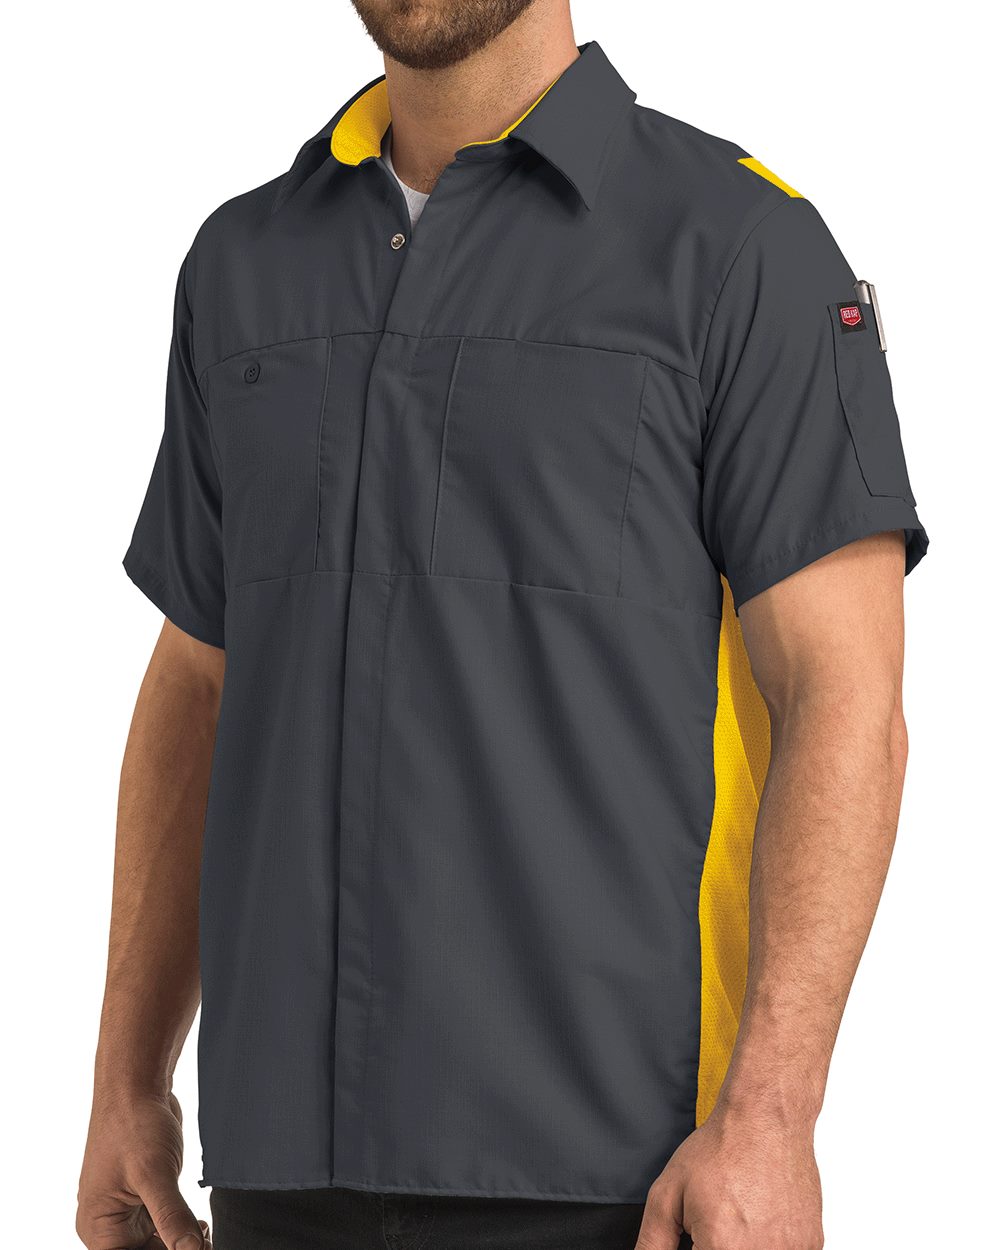 Red Kap Men's Performance Plus Shop Shirt with Oilblok Technology 